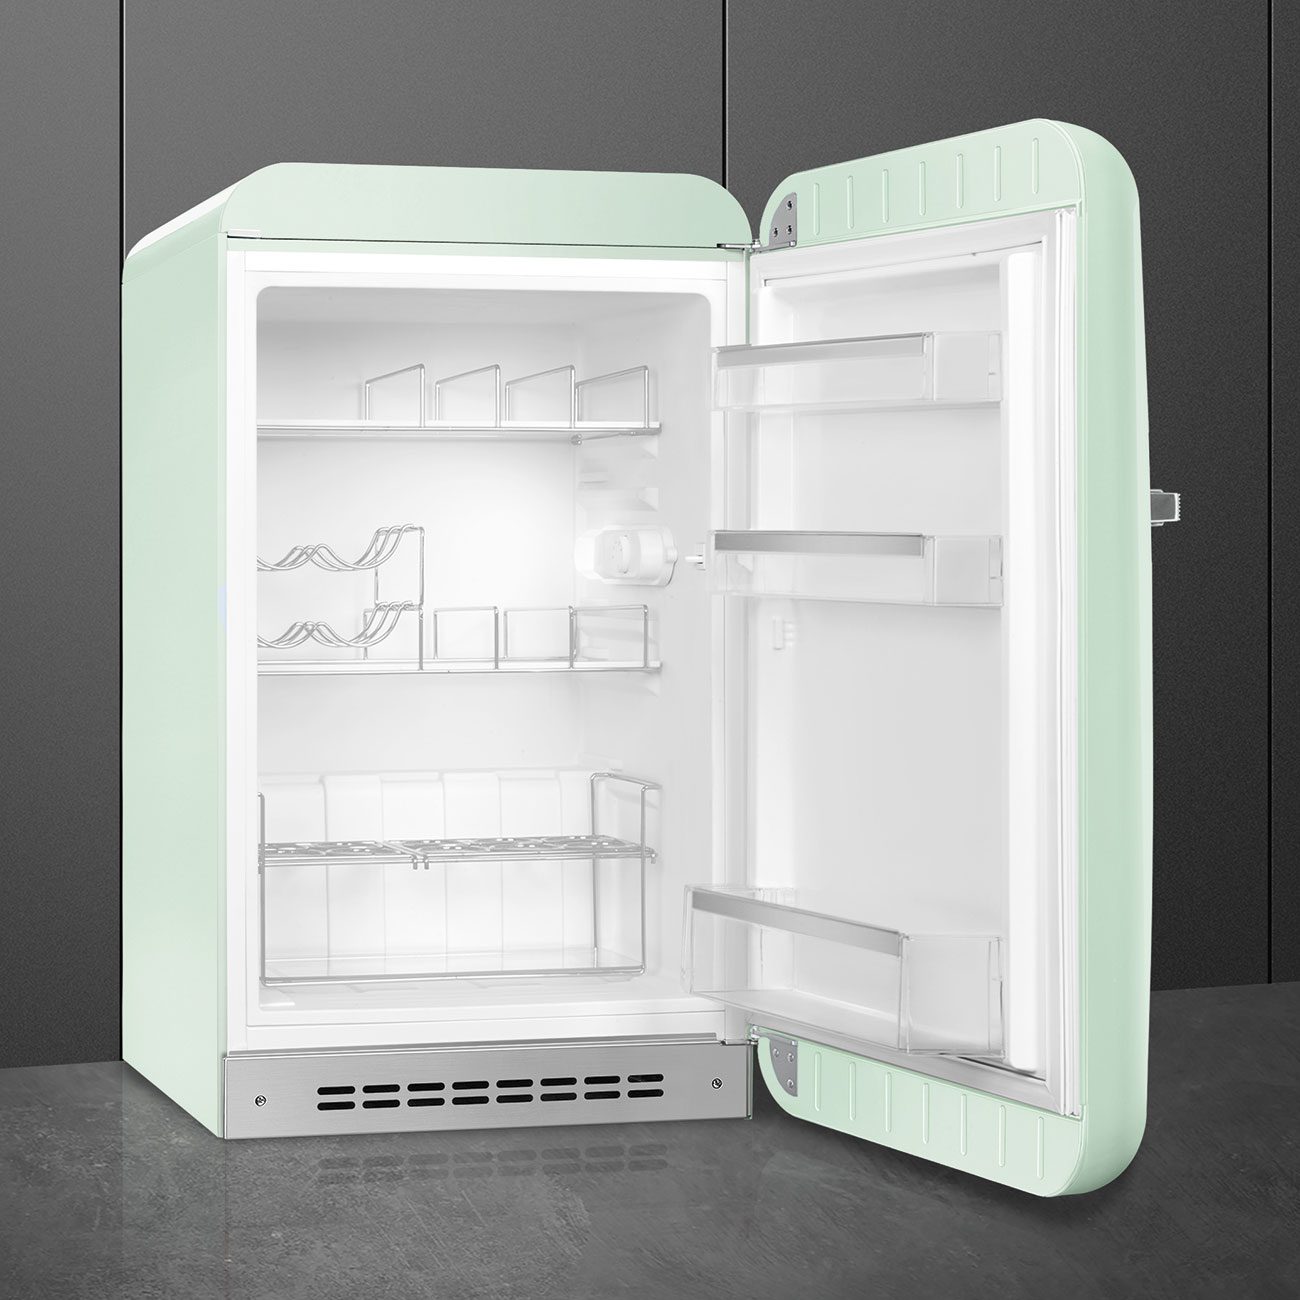 Pastel green refrigerator - Smeg_5